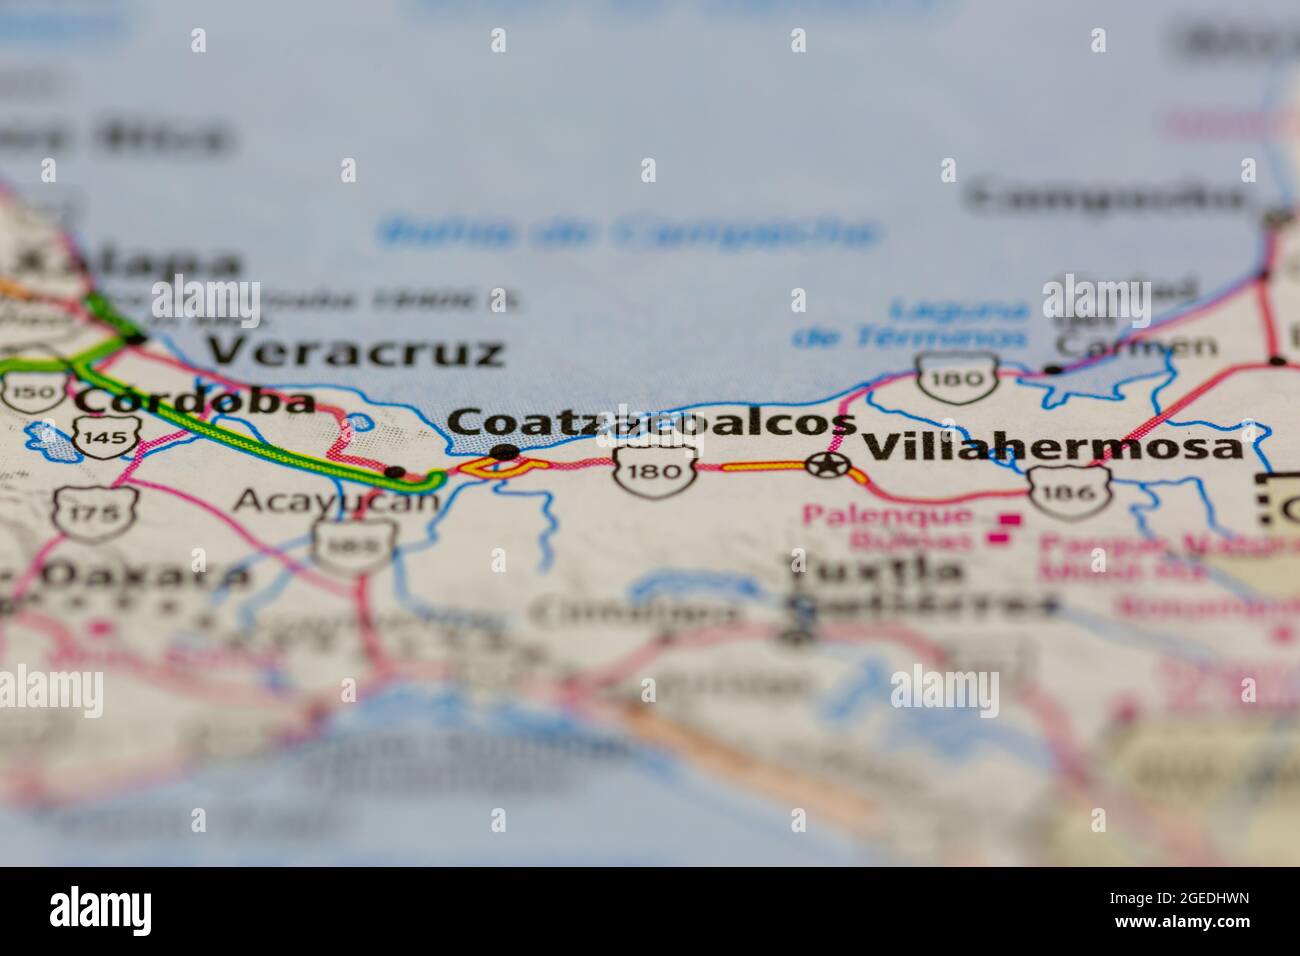 Coatzacoalcos Mexiko auf einer Straßenkarte oder Geografie-Karte angezeigt Stockfoto